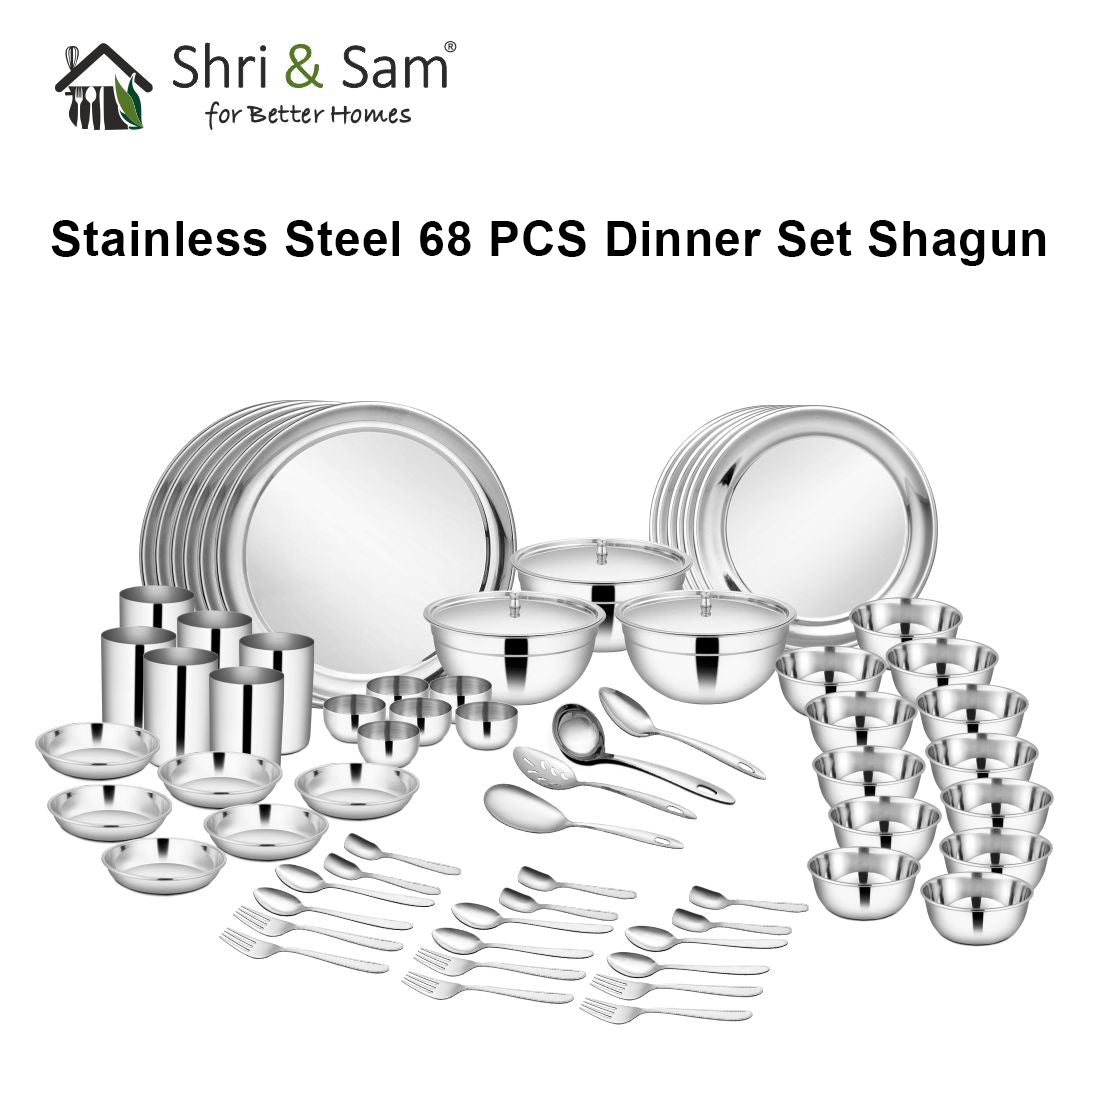 Stainless Steel 68 PCS Dinner Set (6 People) Shagun